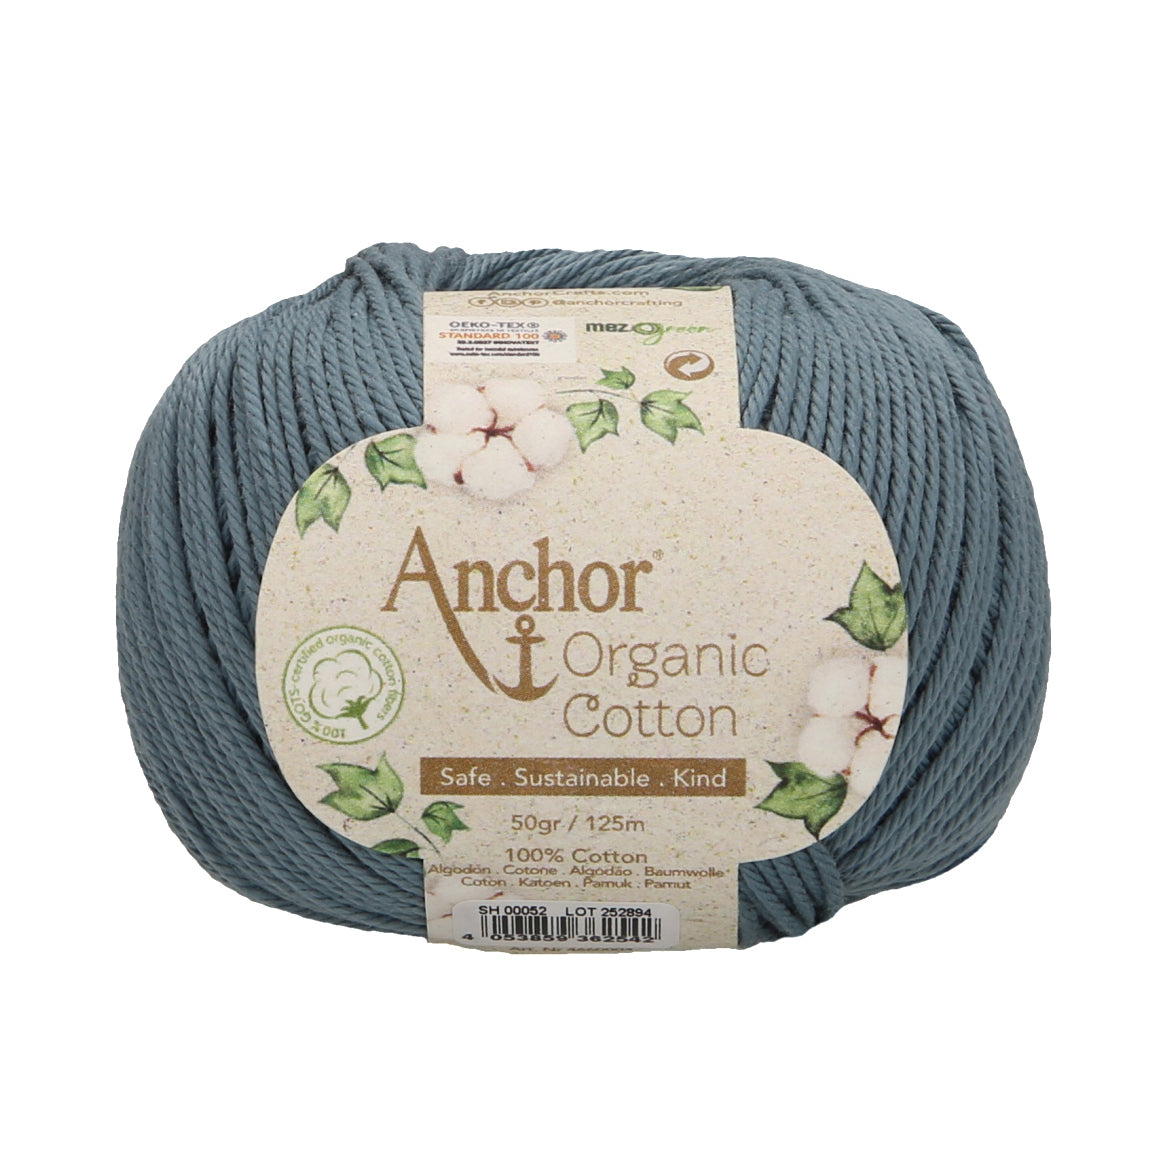 Anchor - Organic Cotton - 50g Ball - Ocean Blue